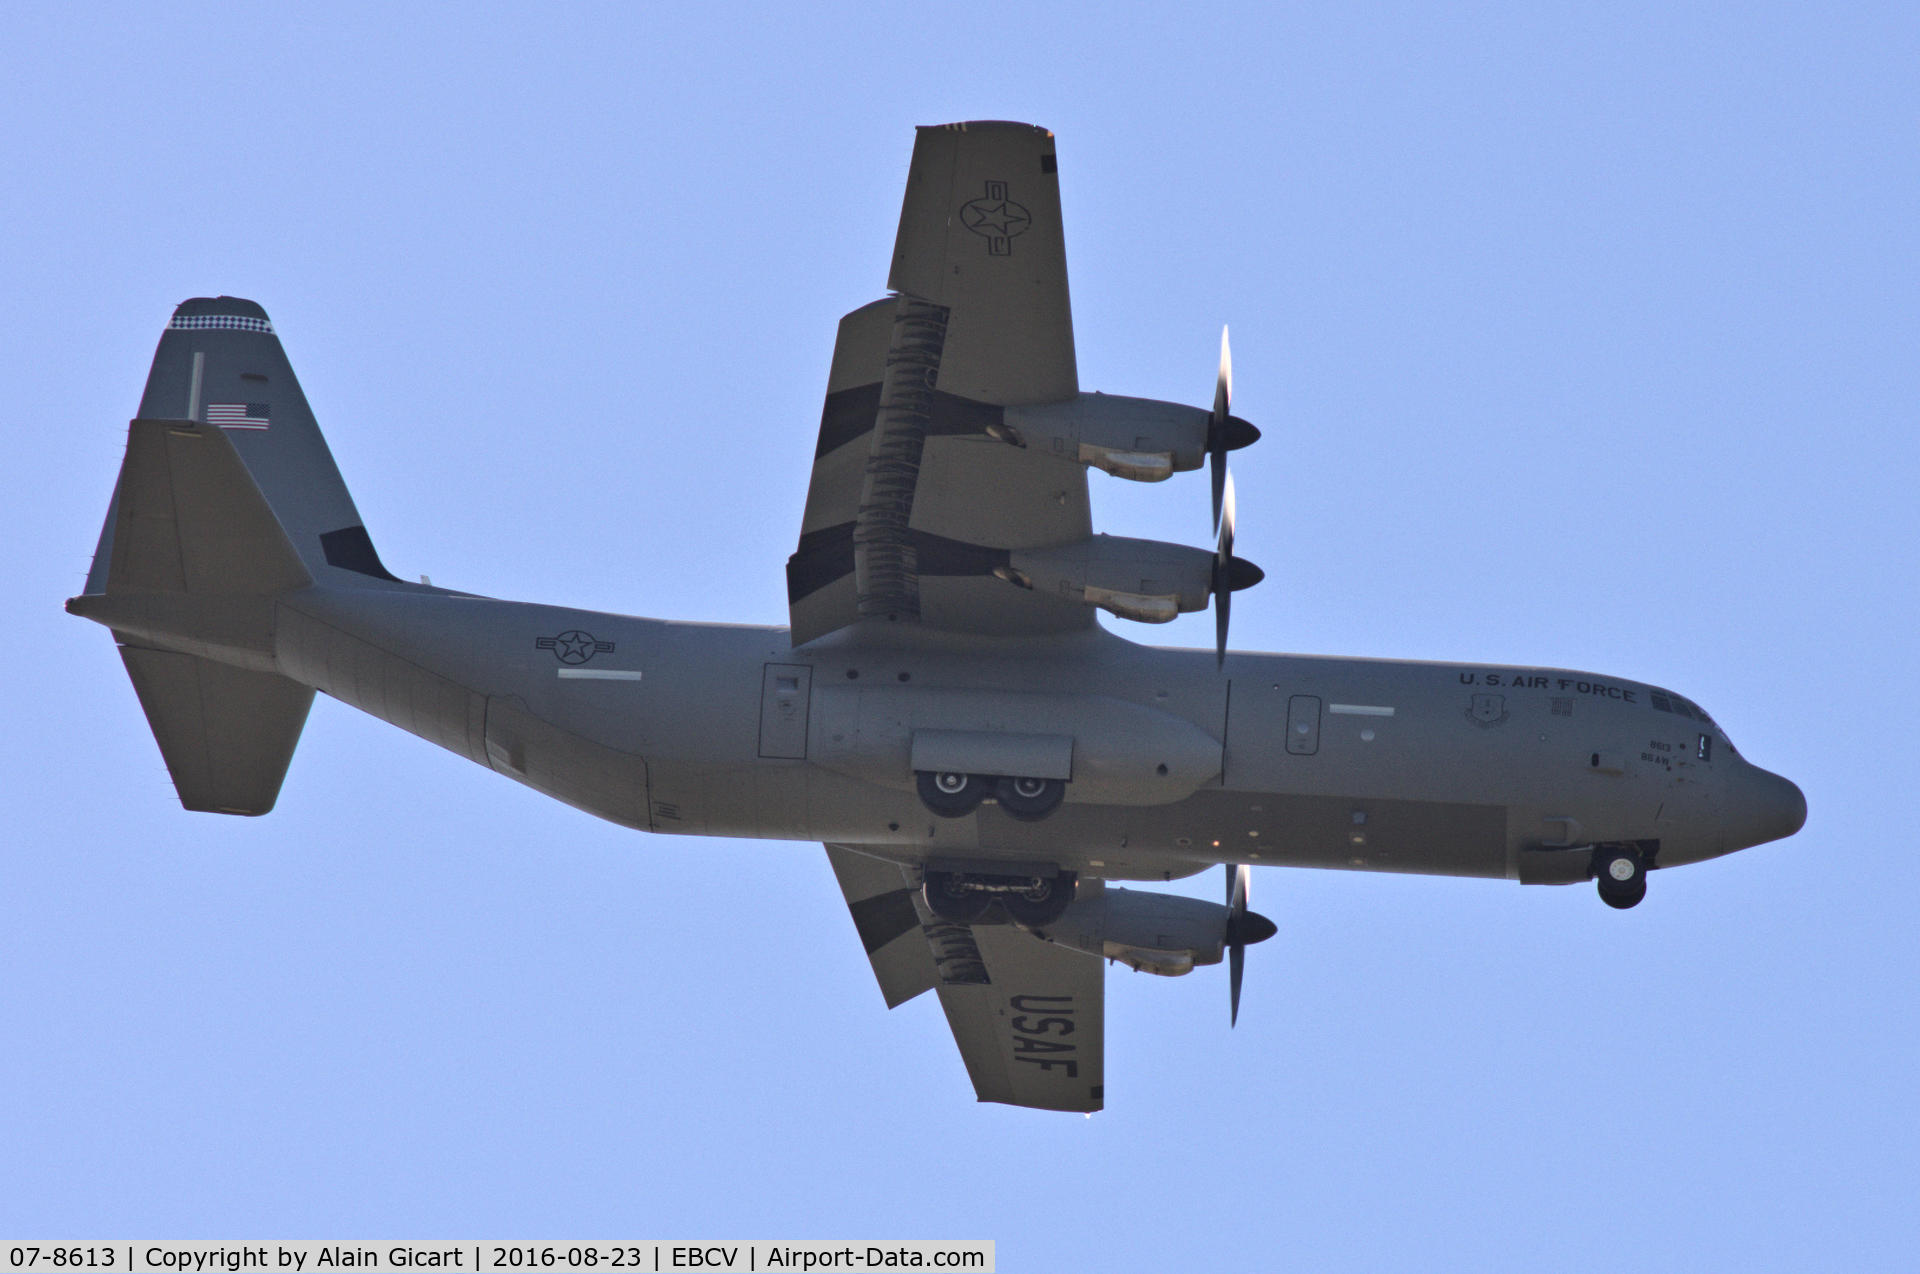 07-8613, 2004 Lockheed Martin C-130J-30 Super Hercules C/N 382-5624, Approach Chièves Air Base - Belgium